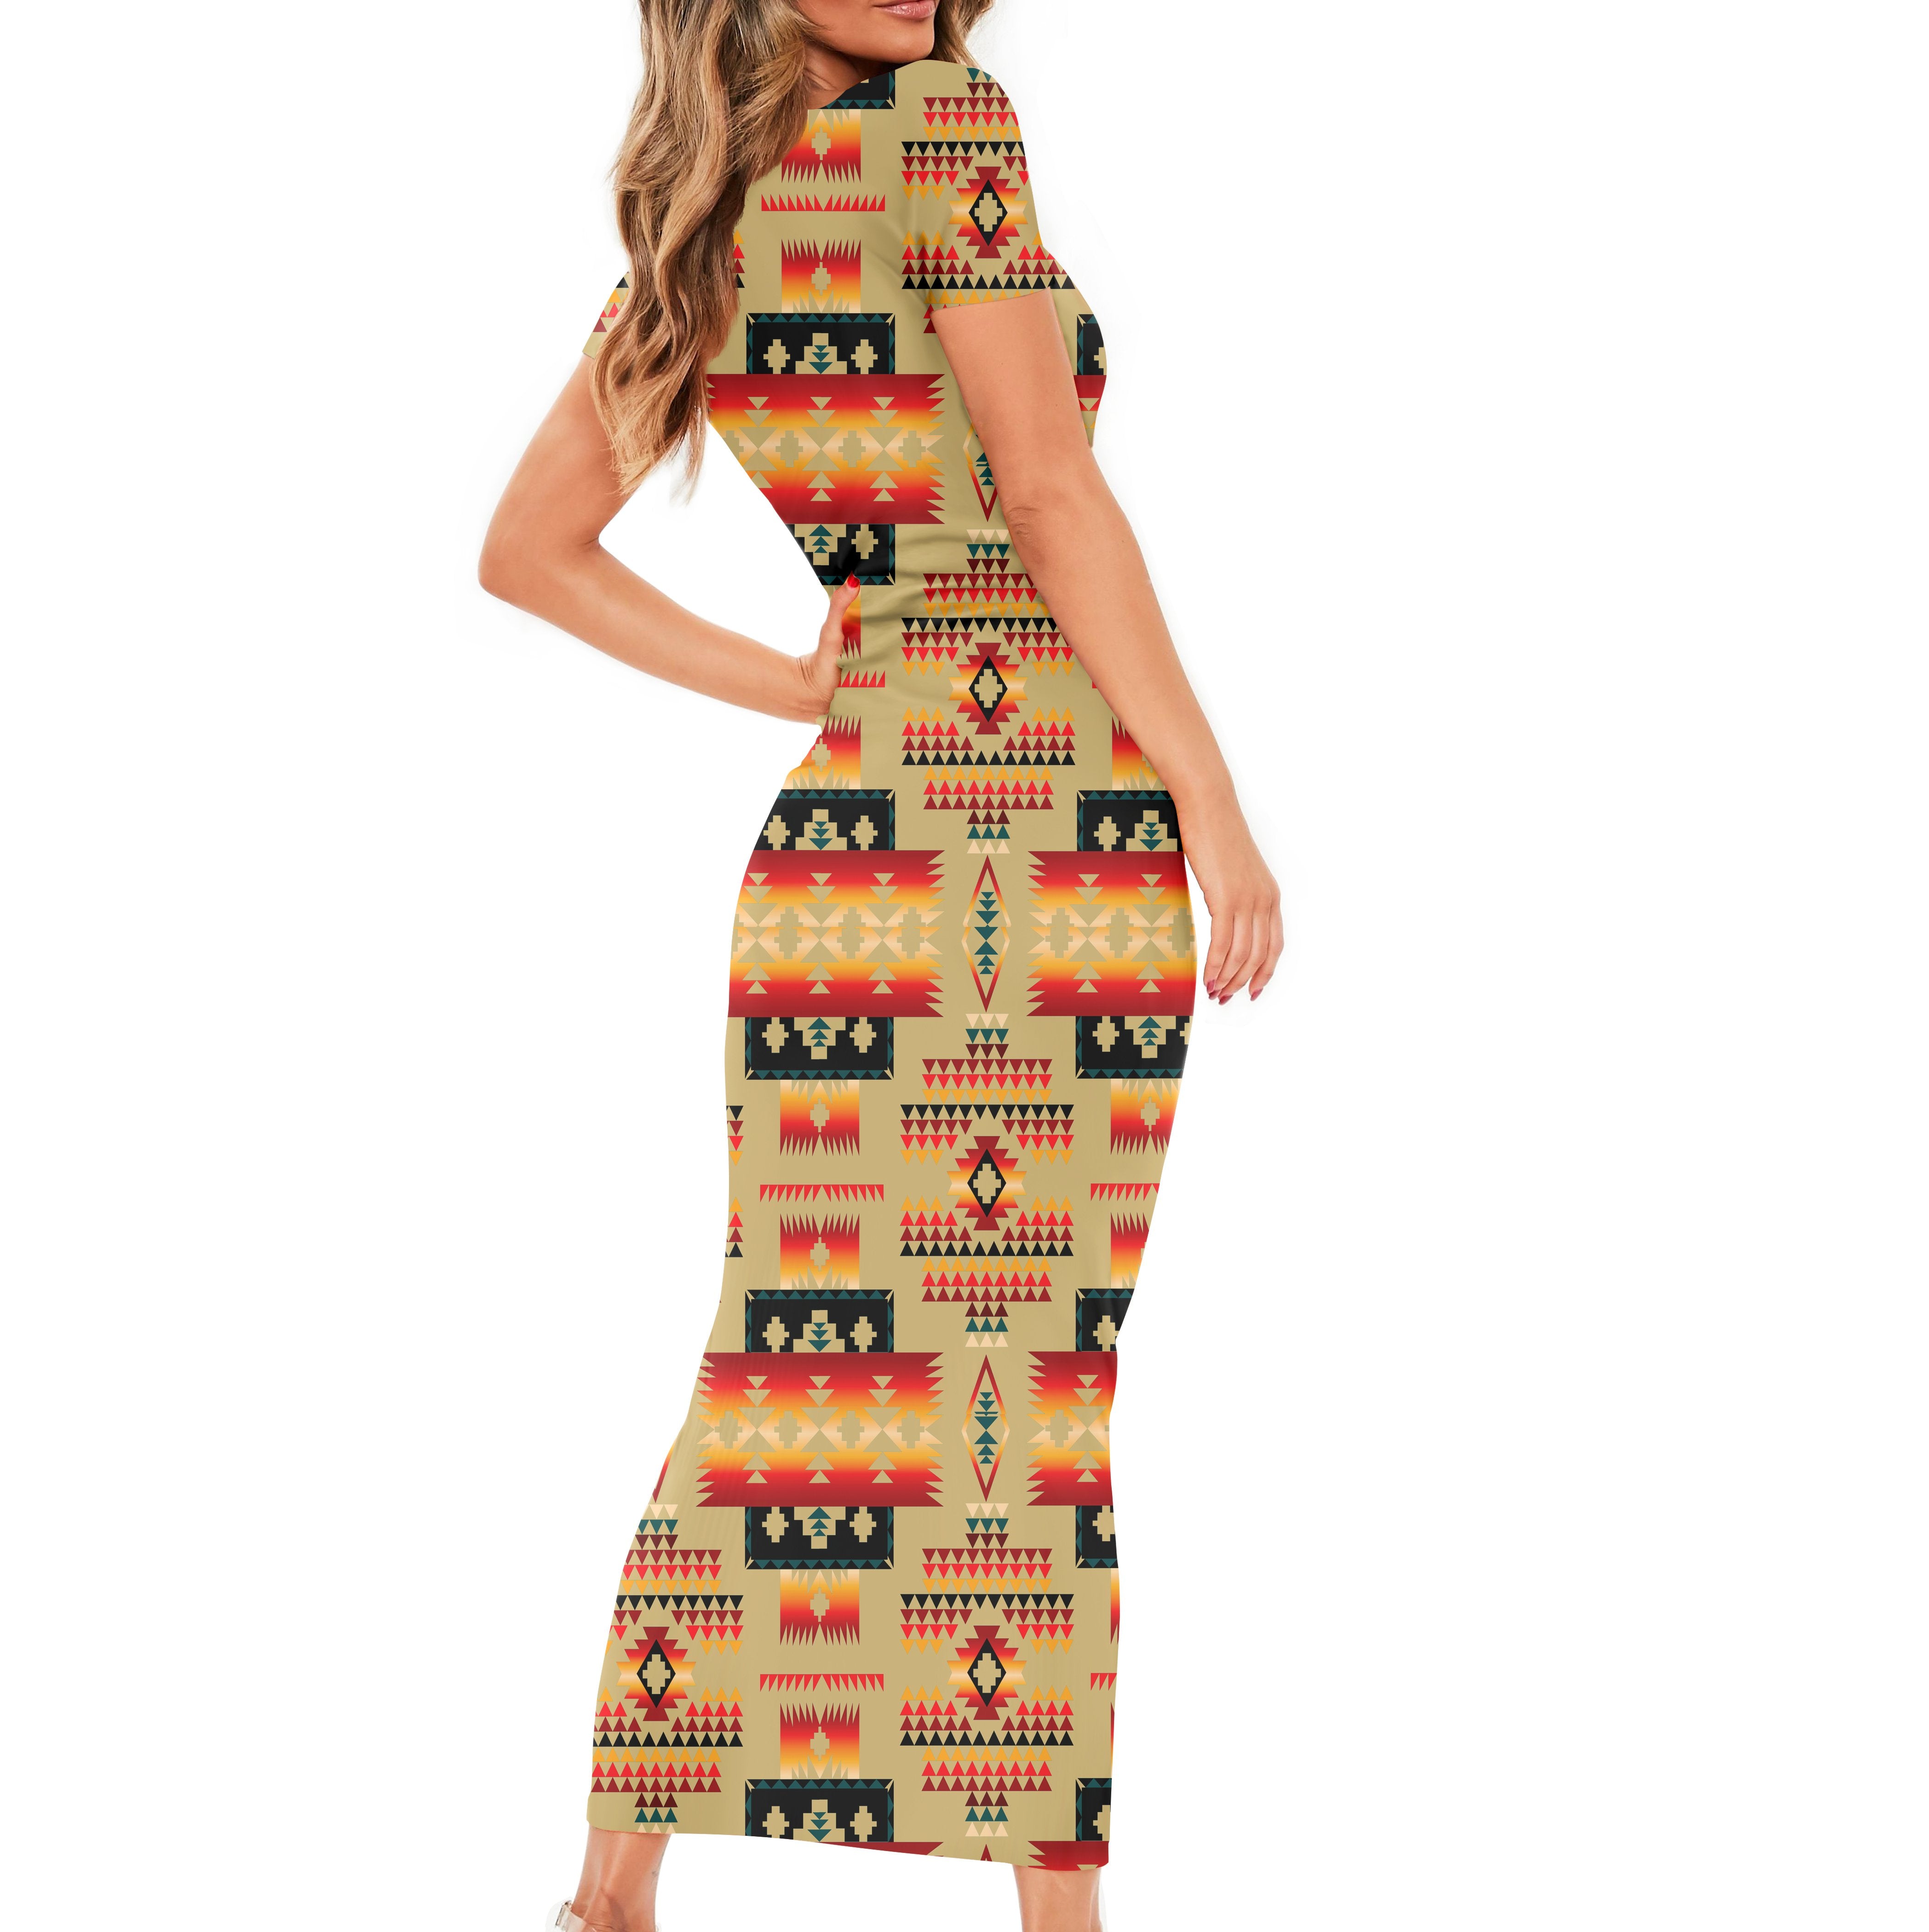 Powwow Store gb nat00046 15 light brown tribe pattern native american short sleeved body dress